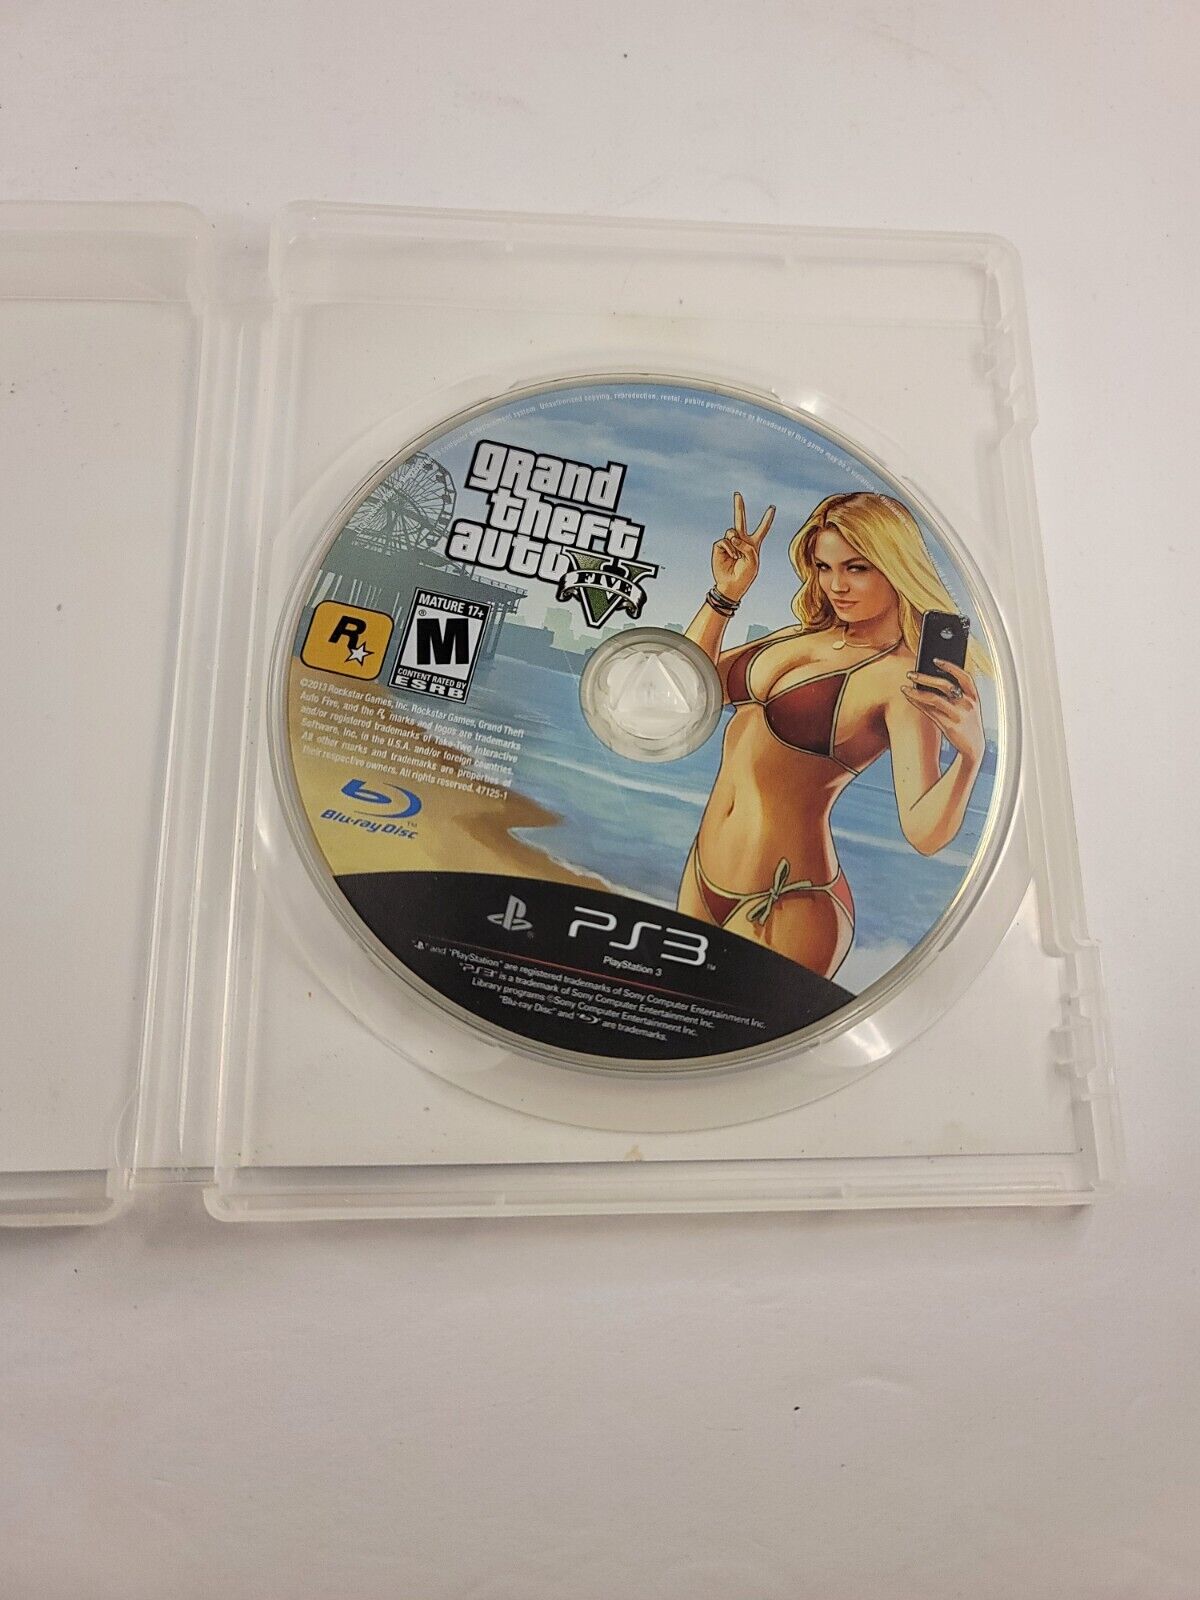 Grant Theft Auto 5 PlayStation 3